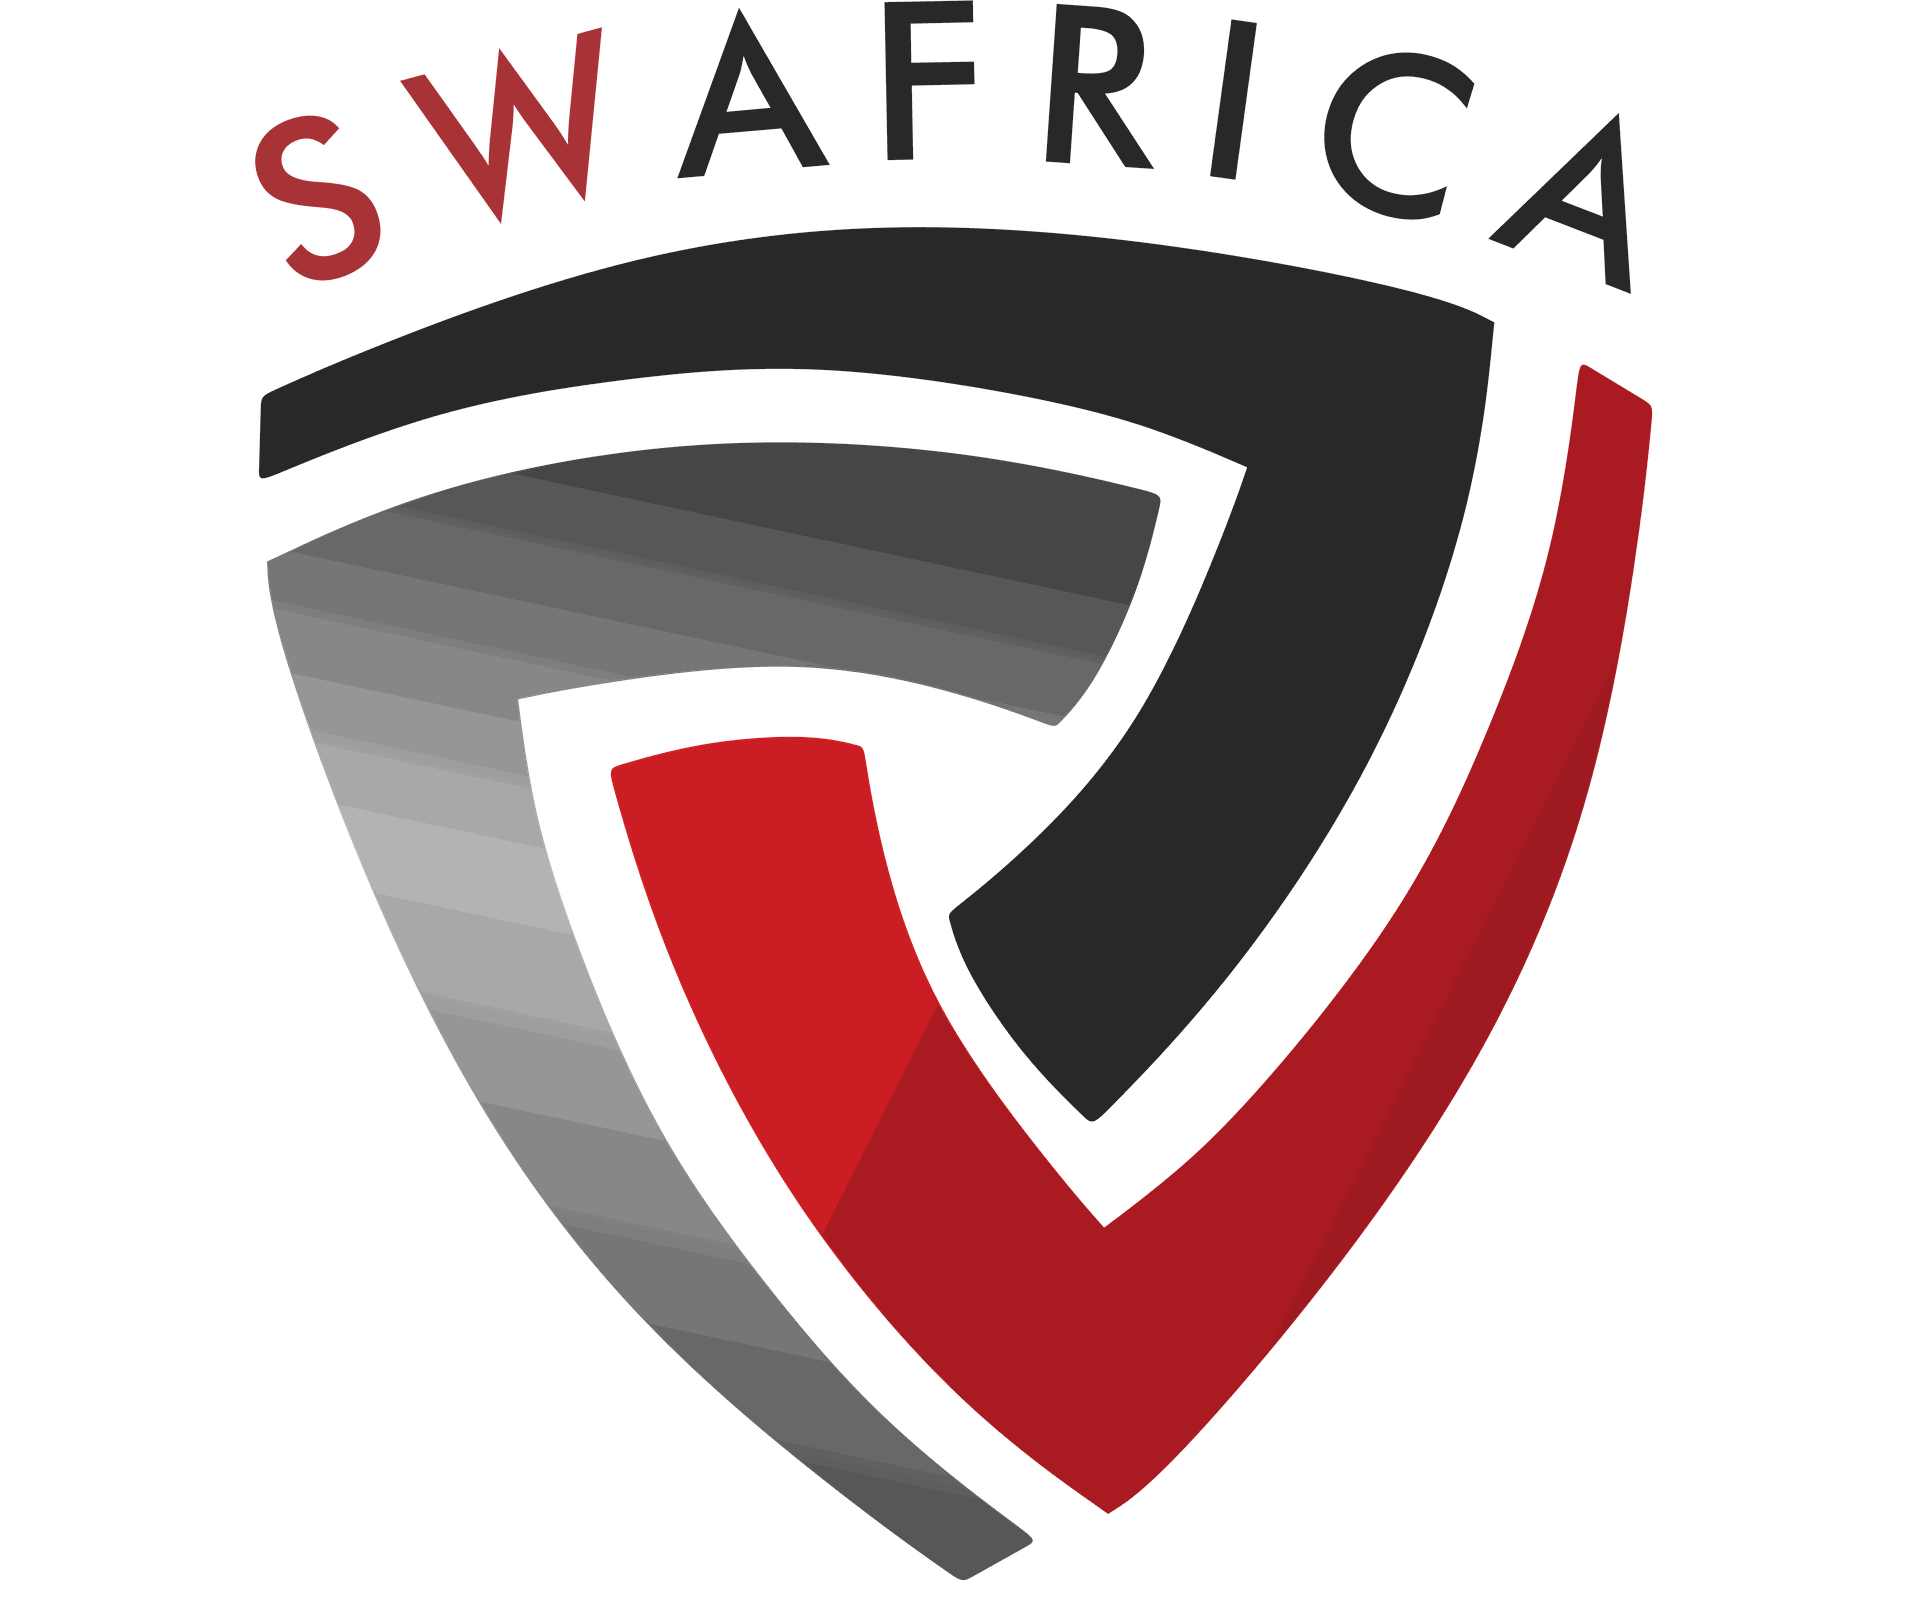 Sw-Africa